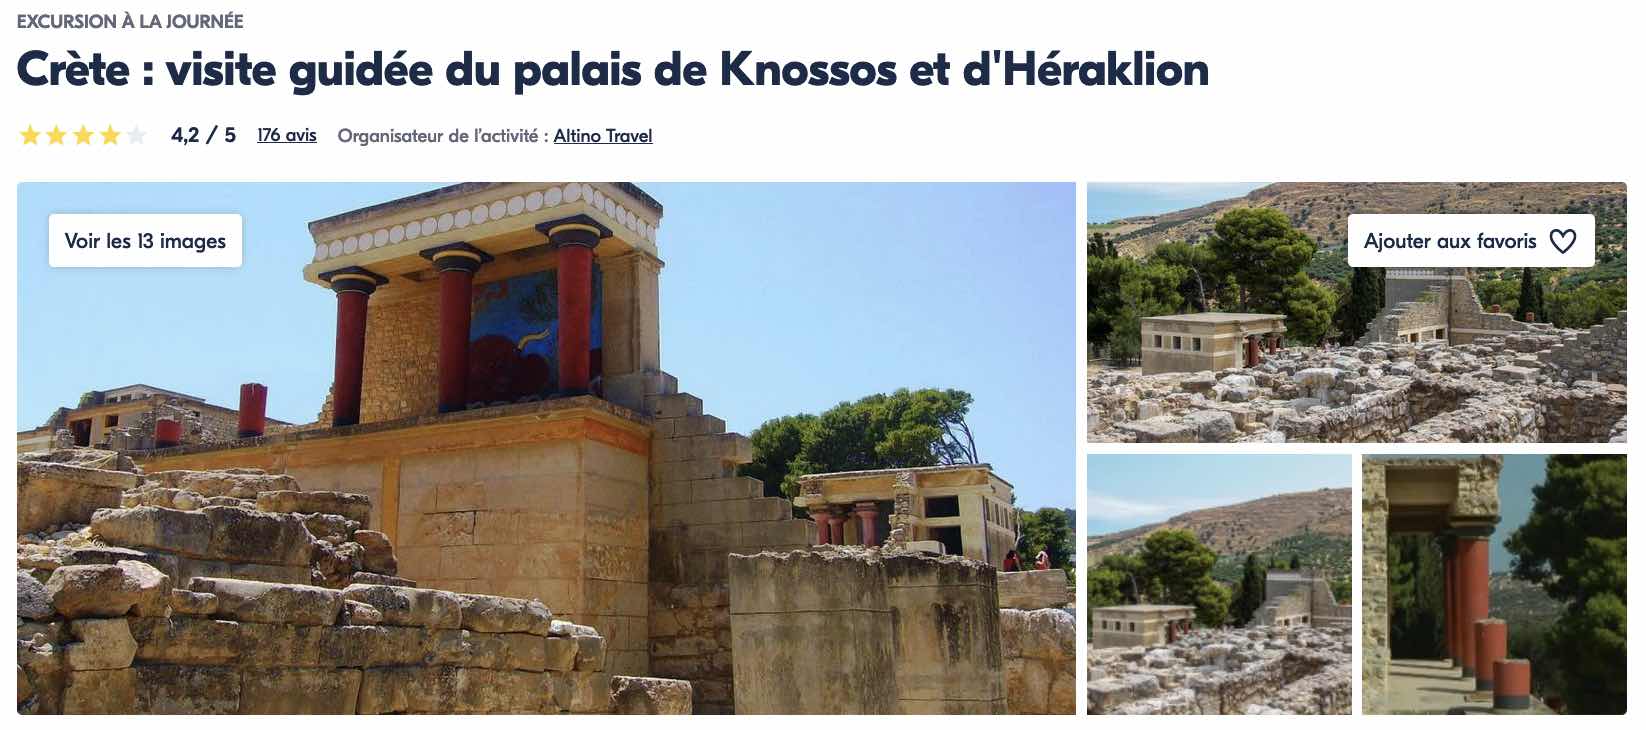 road-trip-crete-visite-guidee-palais-knossos-heraklion